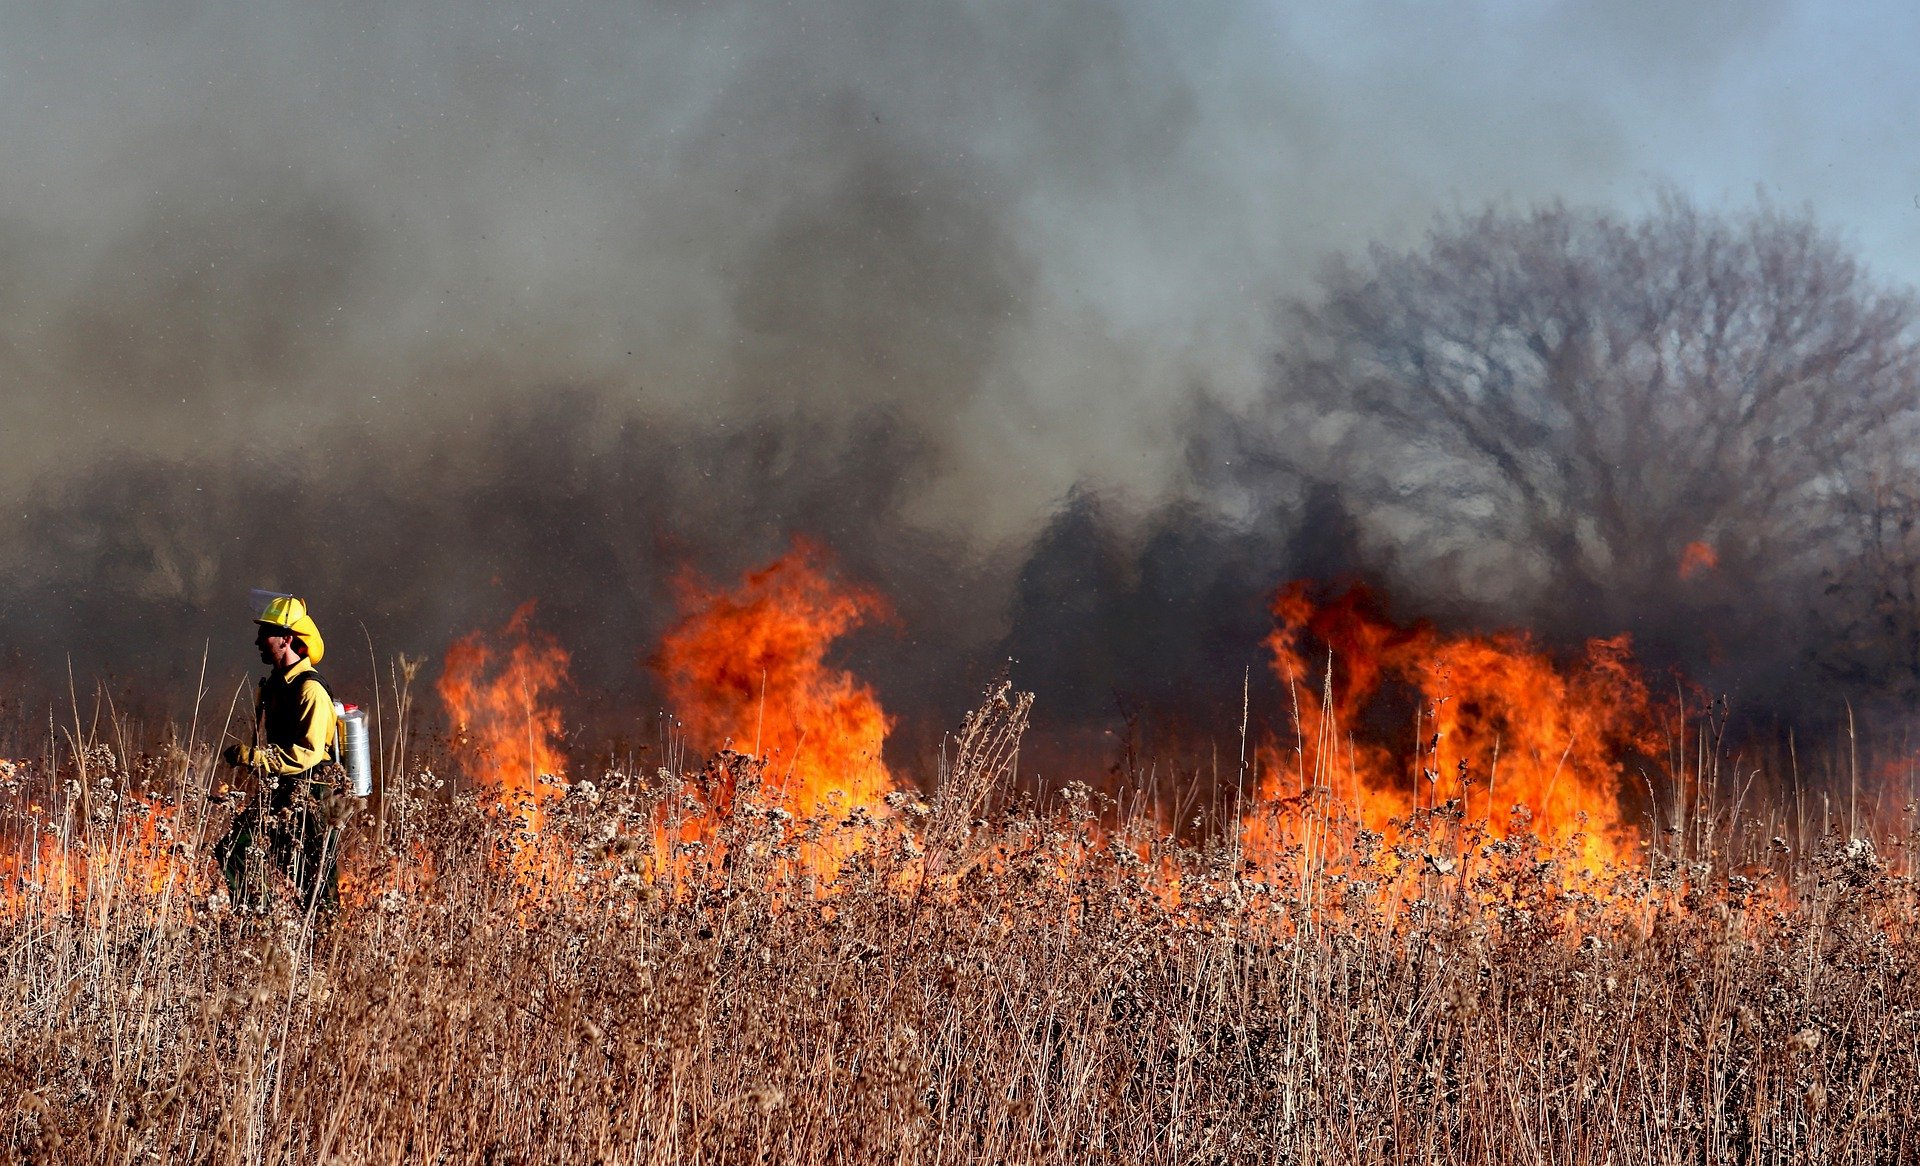 Firefighter in a burning field